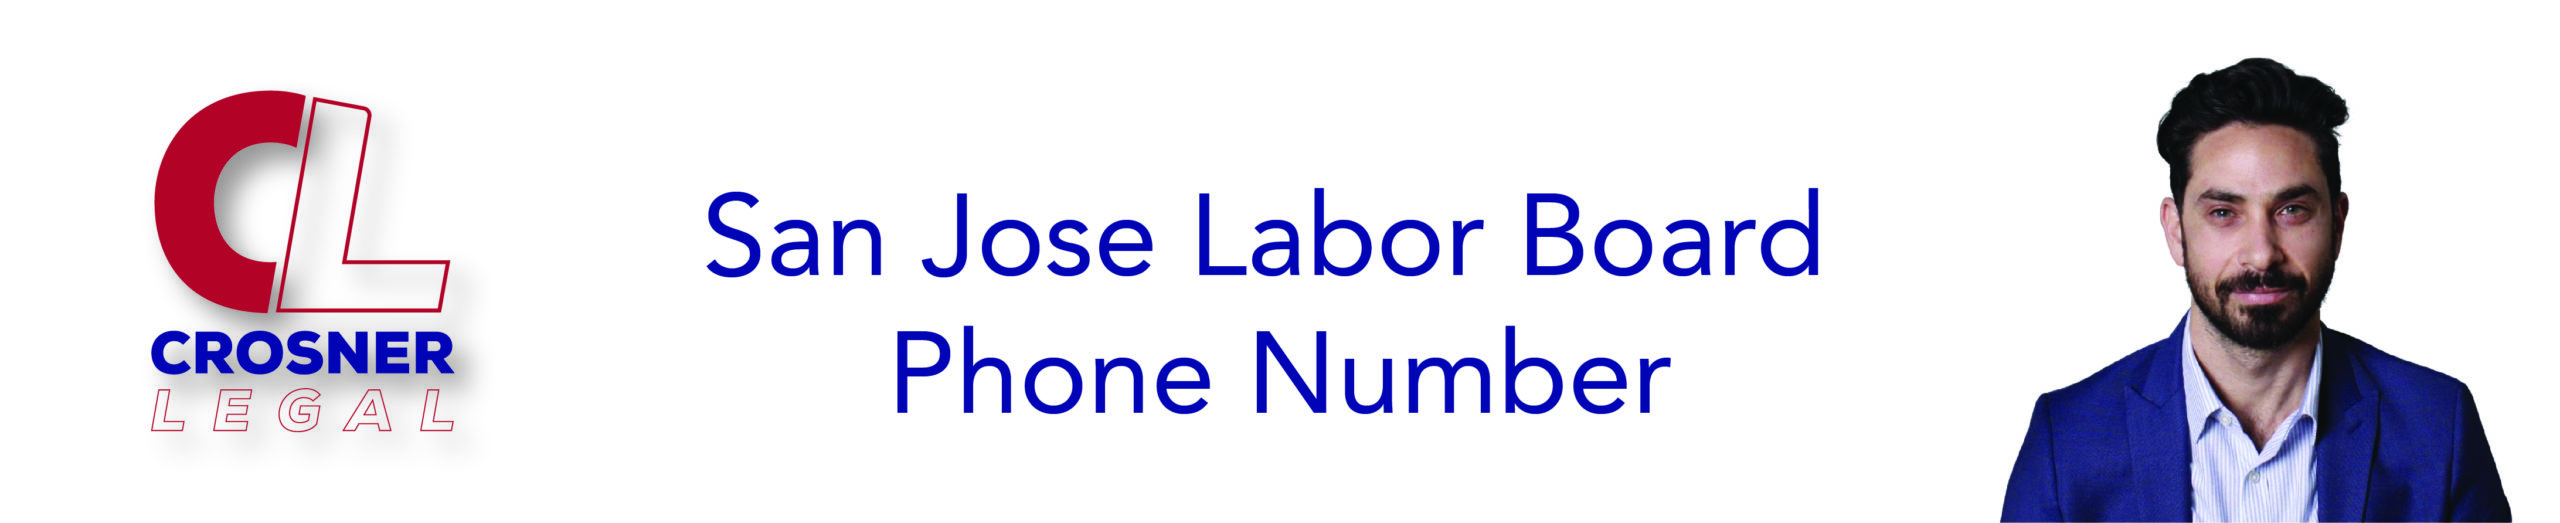 San Jose Labor Board Phone Number